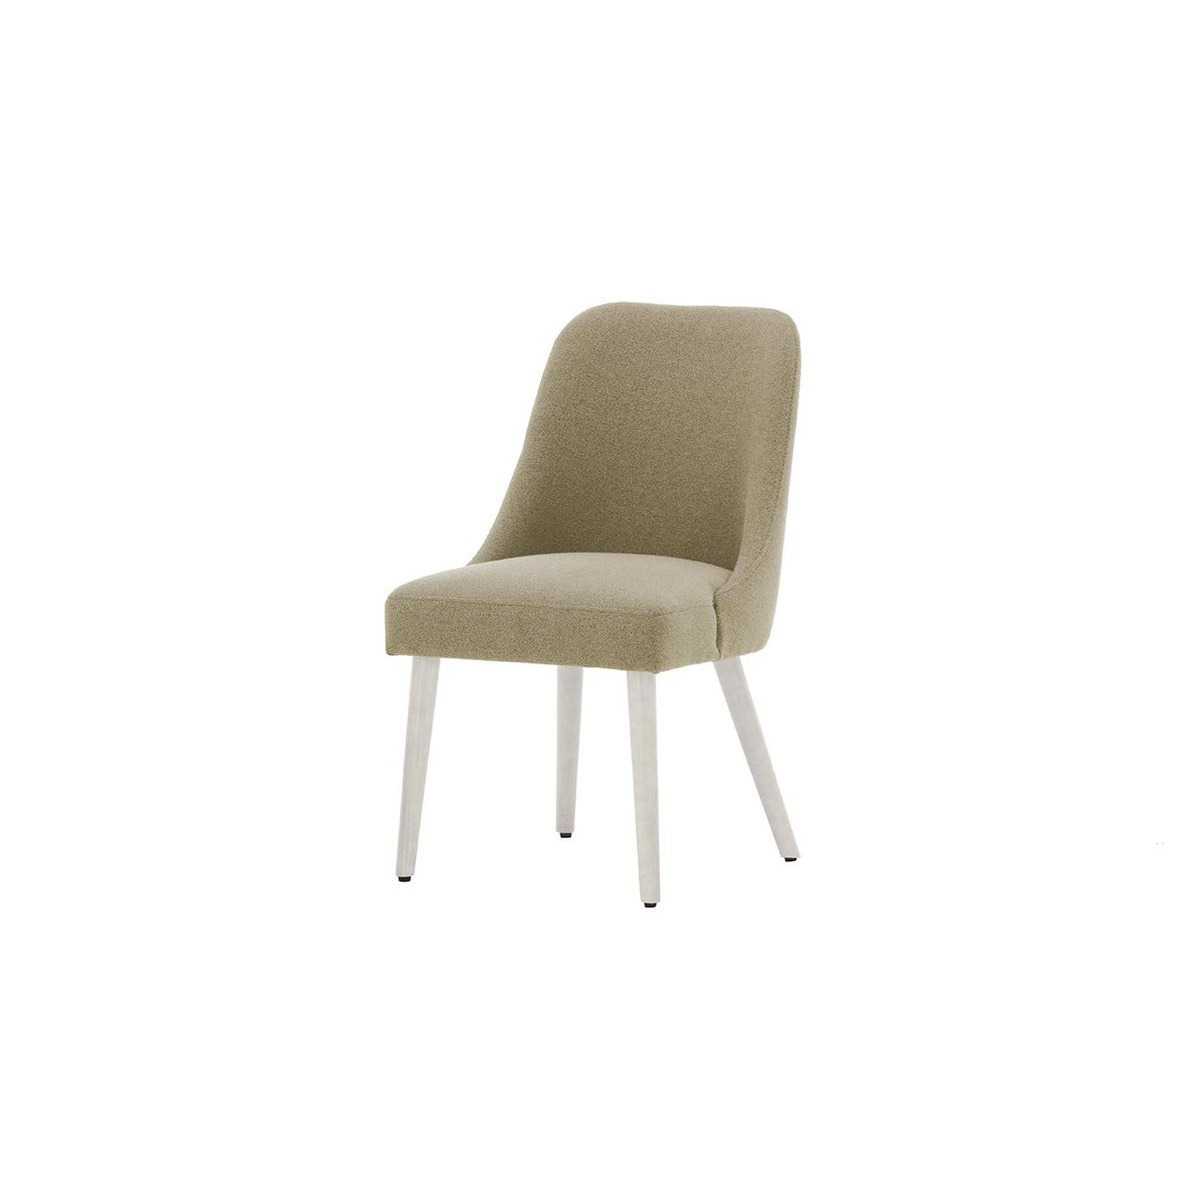 Albion Dining Chair, beige, Leg colour: white - image 1